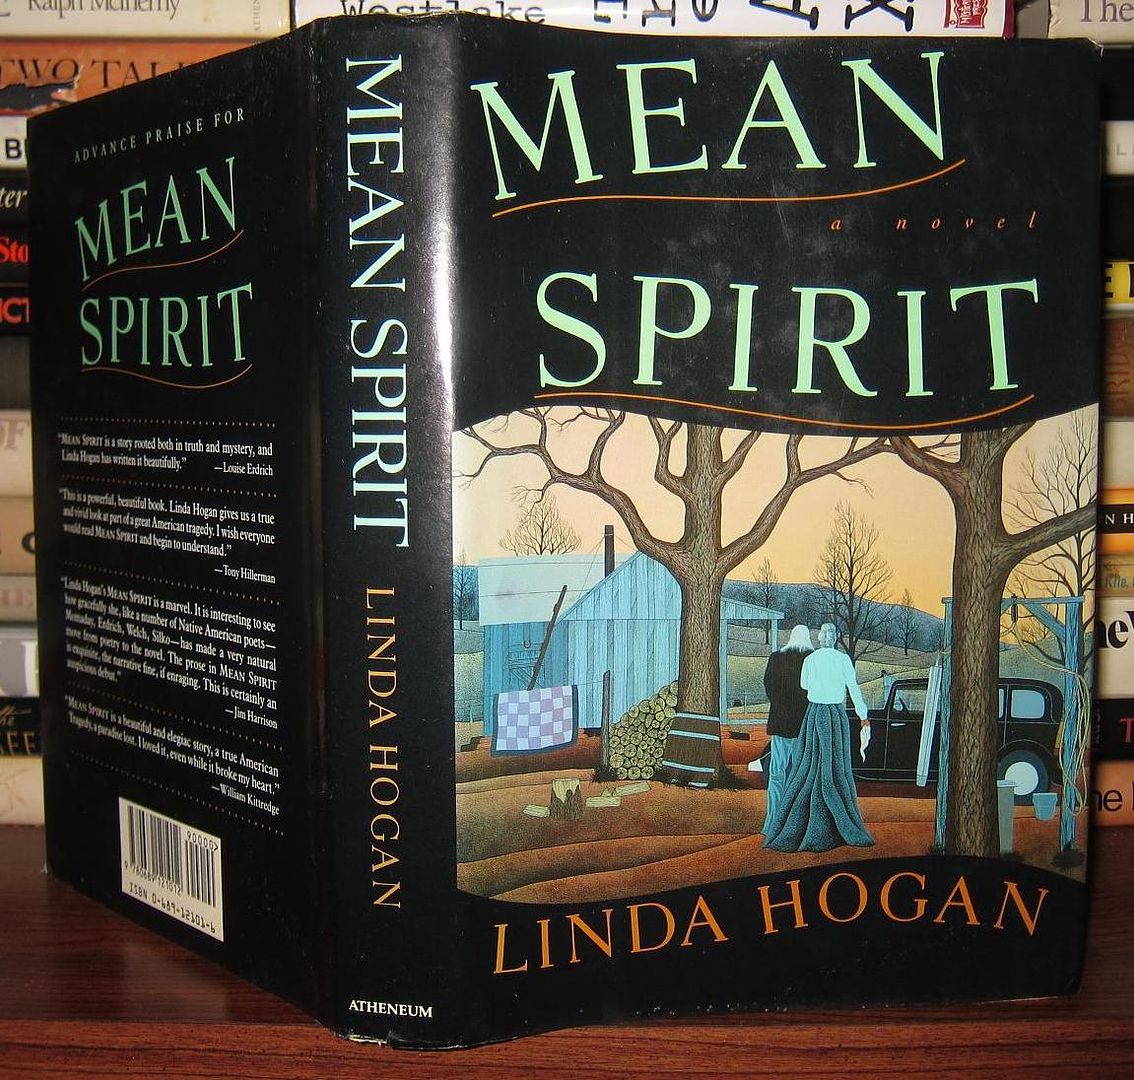 HOGAN, LINDA - Mean Spirit